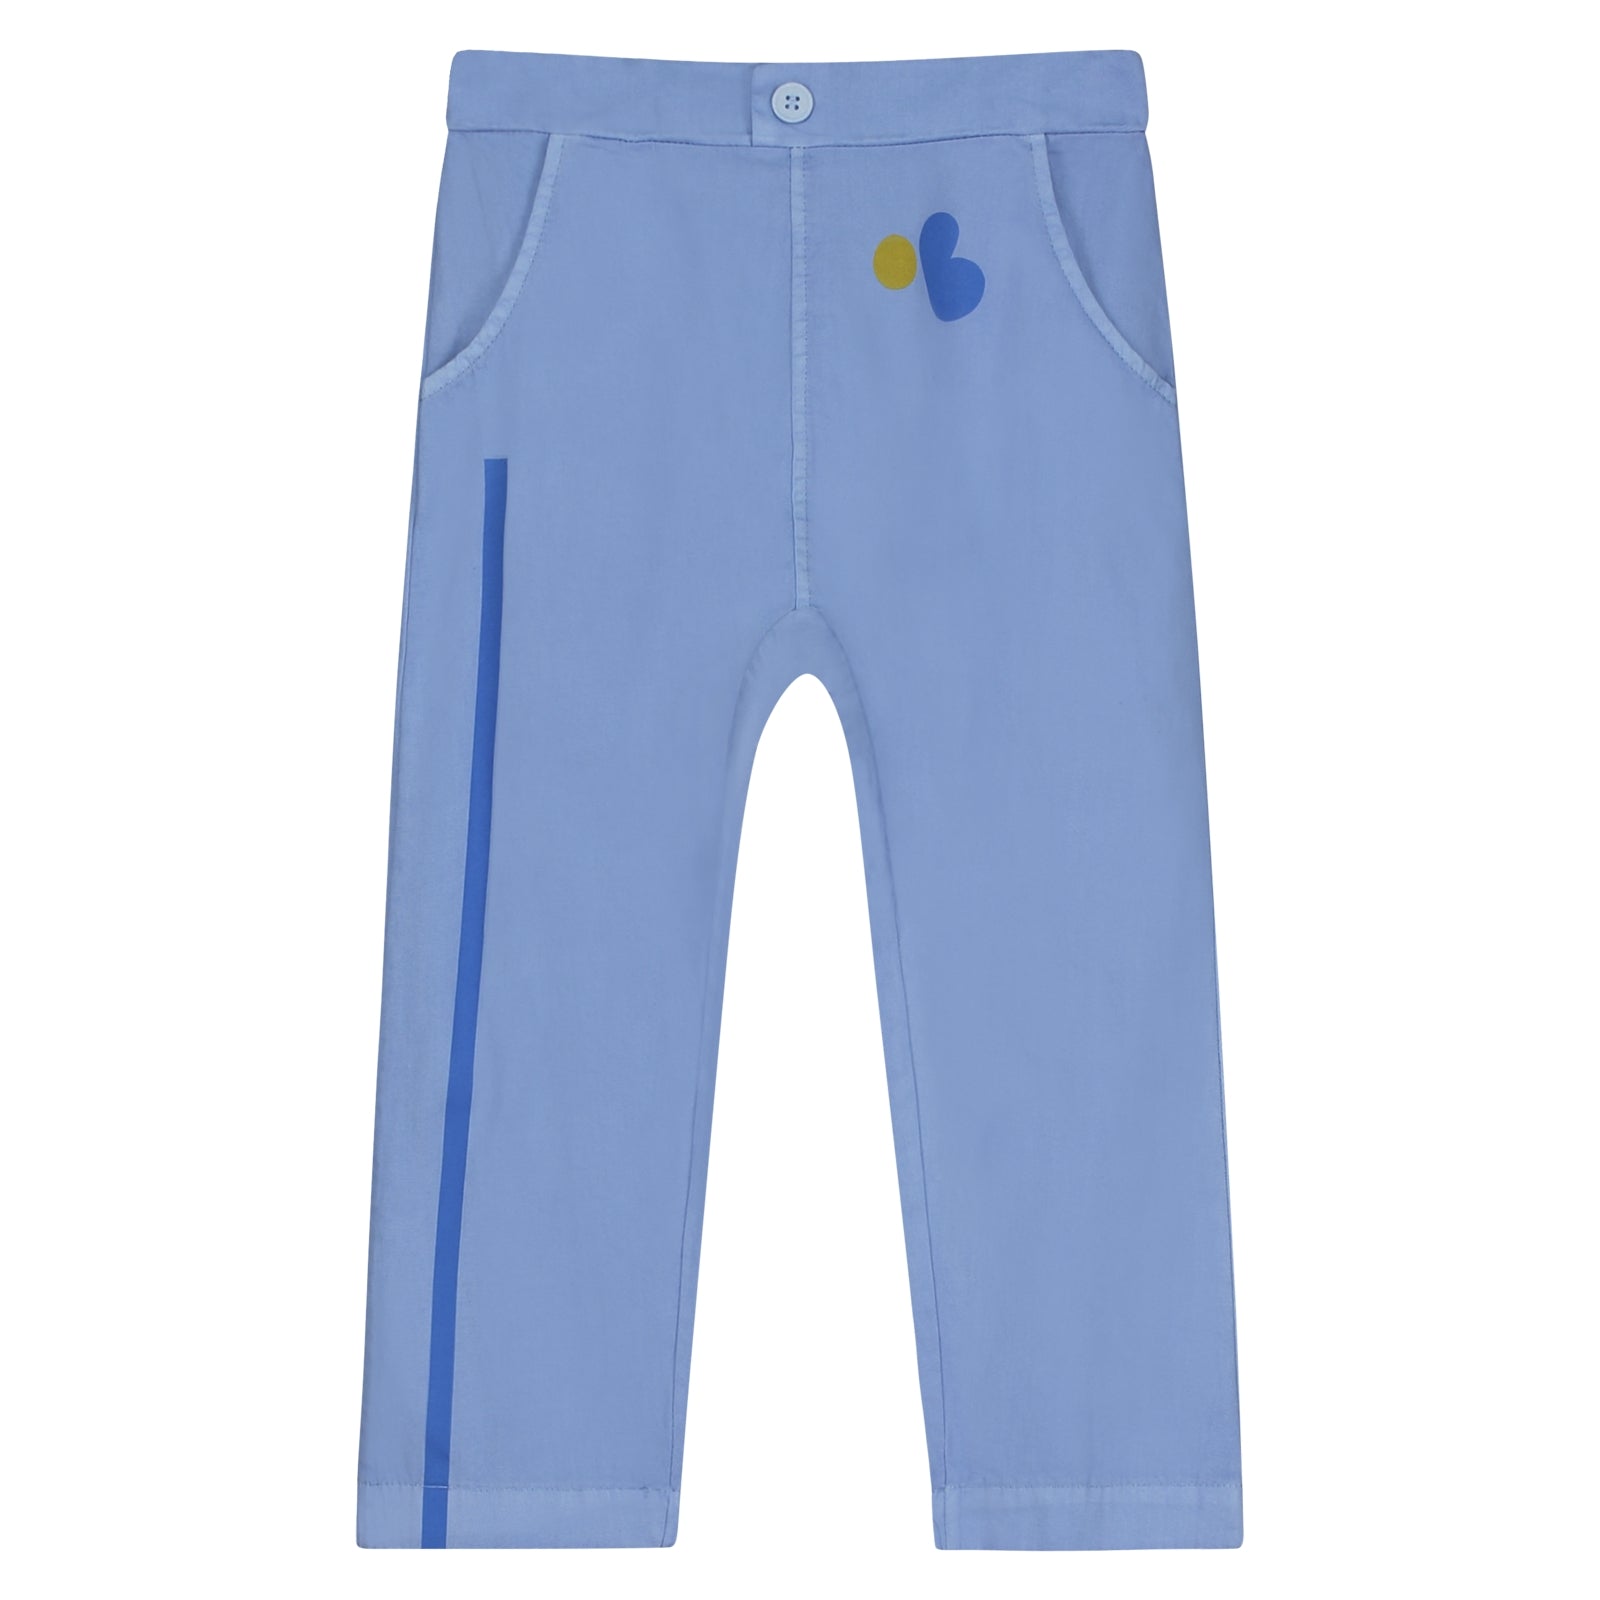 Boys & Girls Blue Cotton Trousers